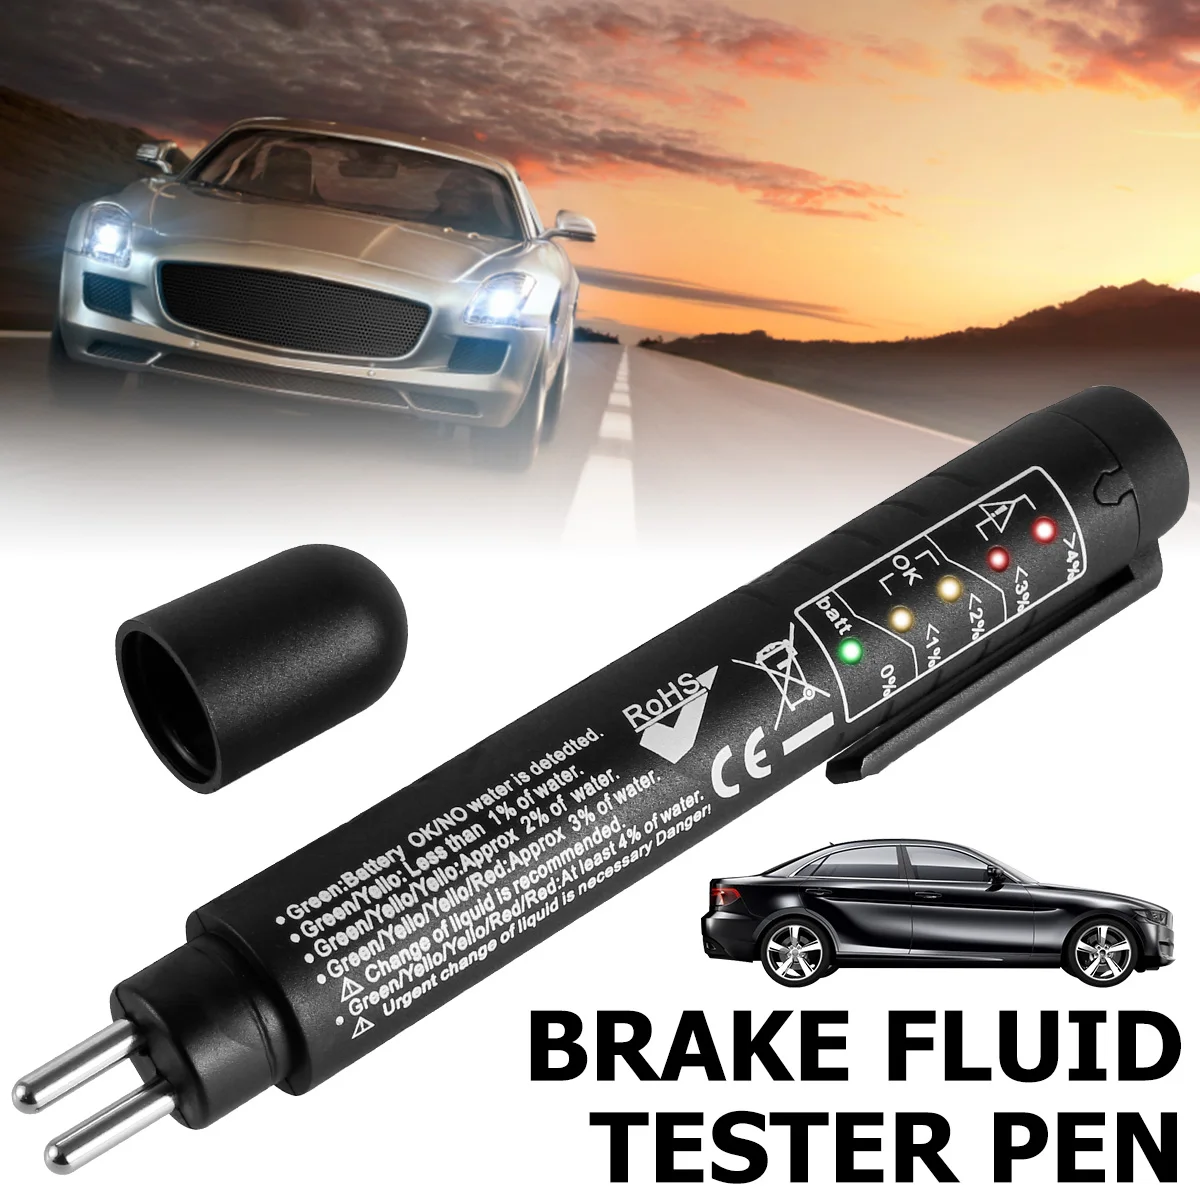 Brake Fluid Tester Accurate Brake Fluid Detection Pen Portable Brake Oil Quality Digital Analyzer Level with 5 LED Display